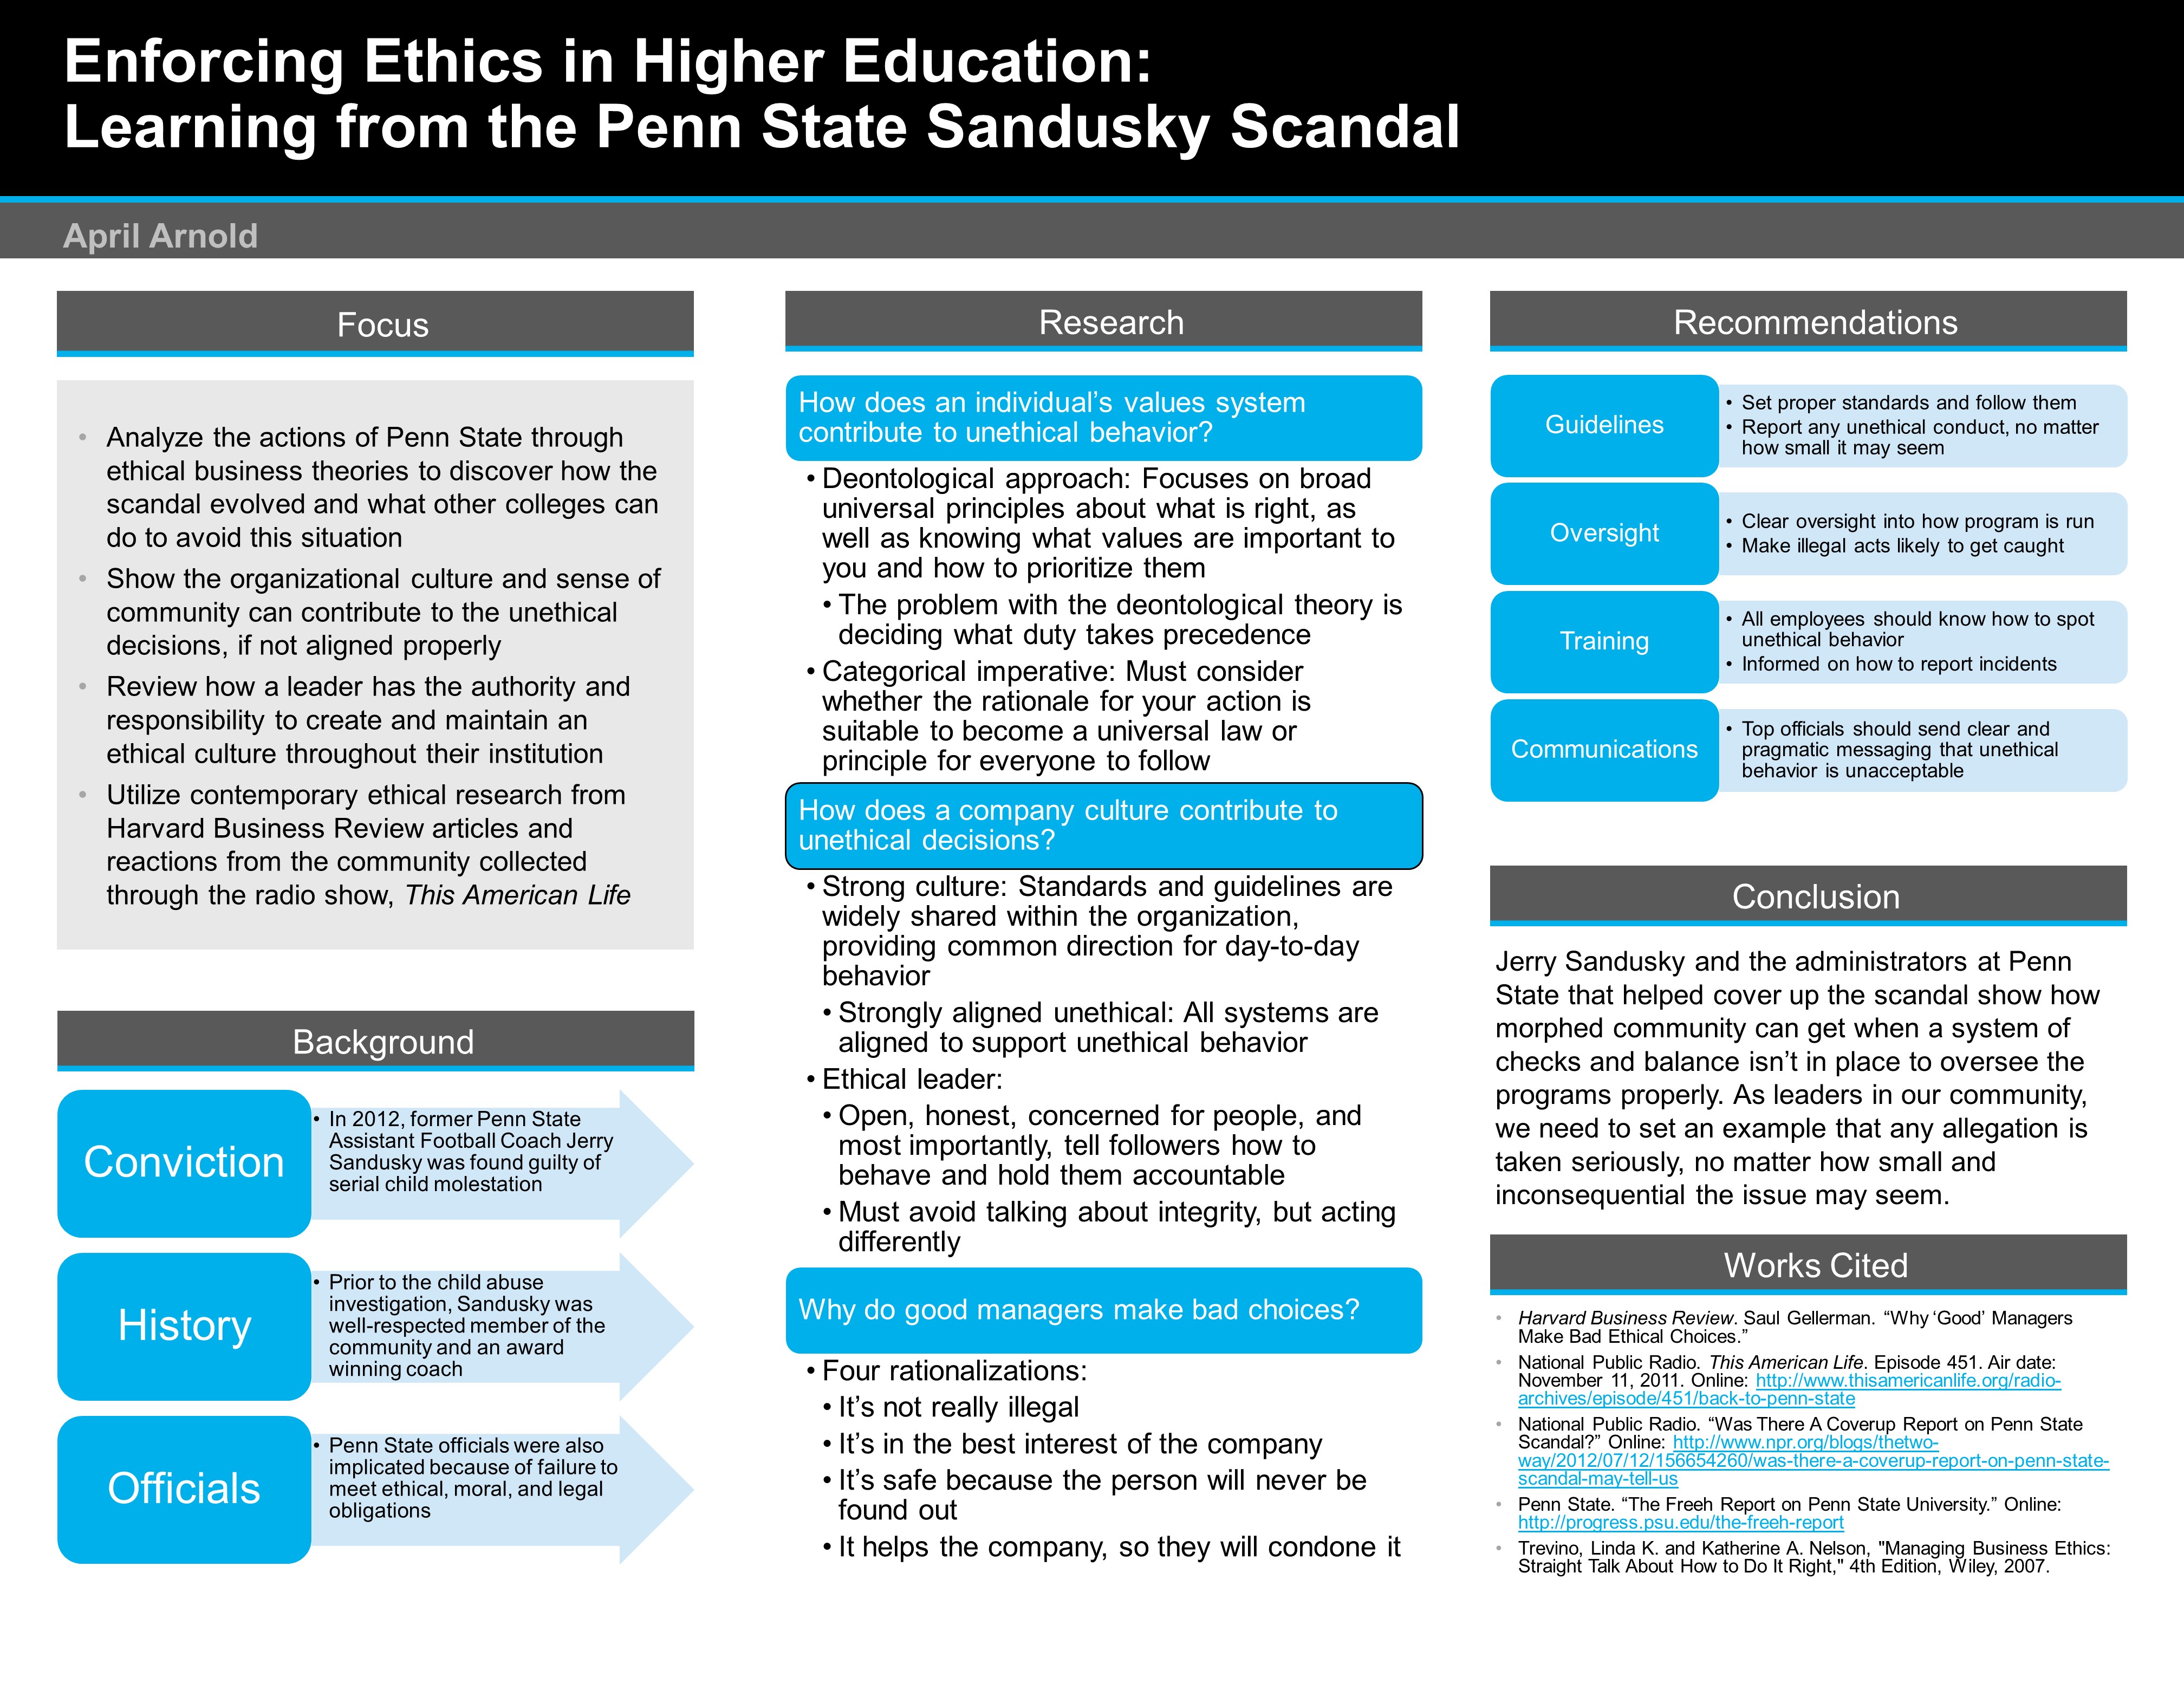 Poster image: 'Enforcing Ethics in Higher Education: Learning from the Penn State Sandusky Scandal'